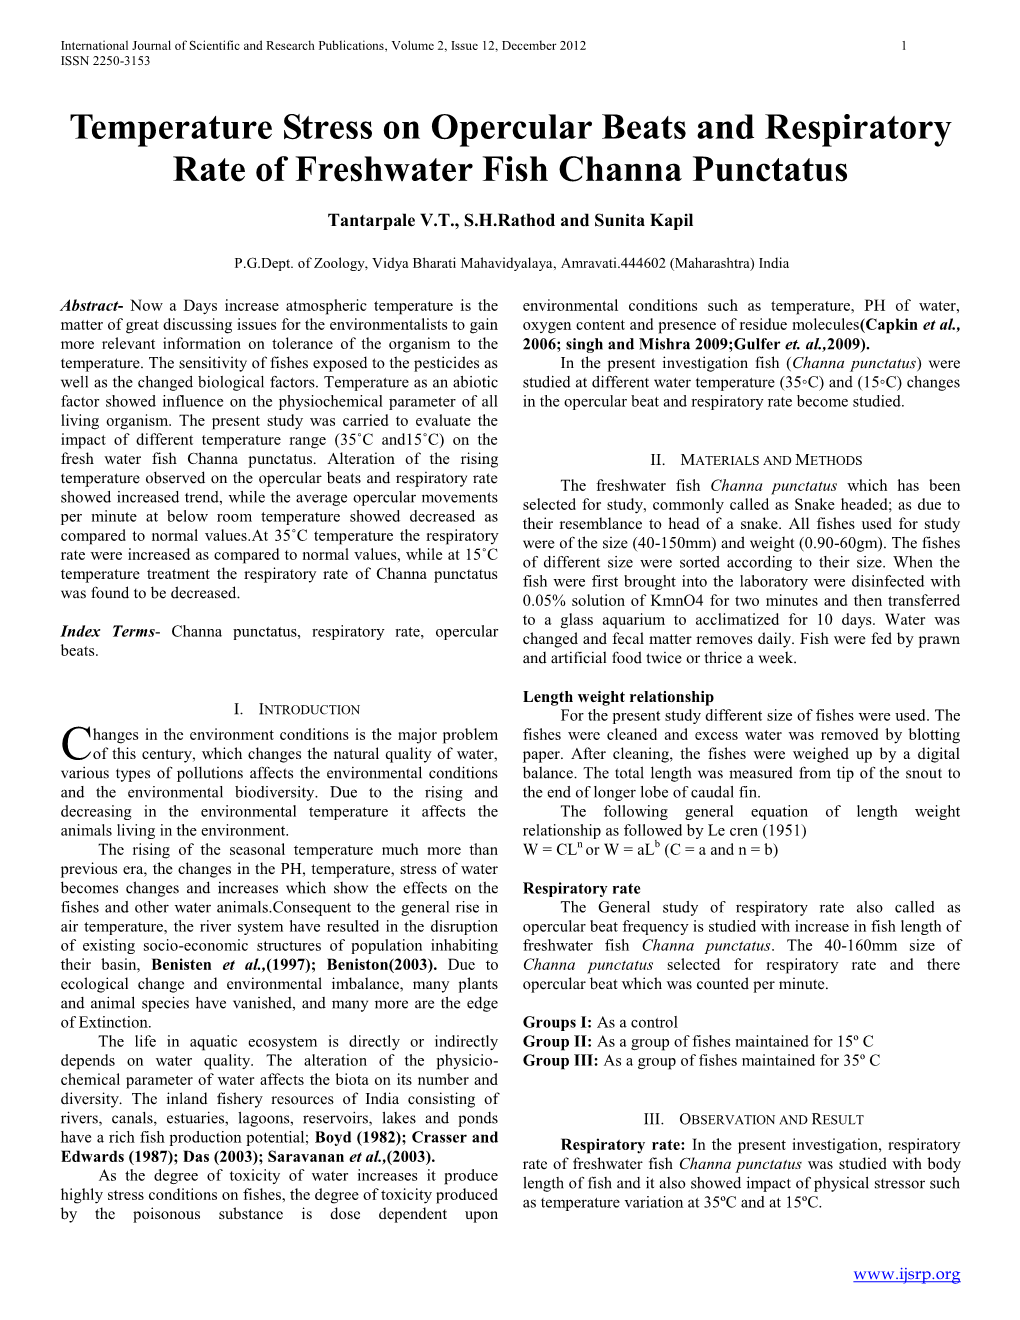 Temperature Stress on Opercular Beats and Respiratory Rate of Freshwater Fish Channa Punctatus